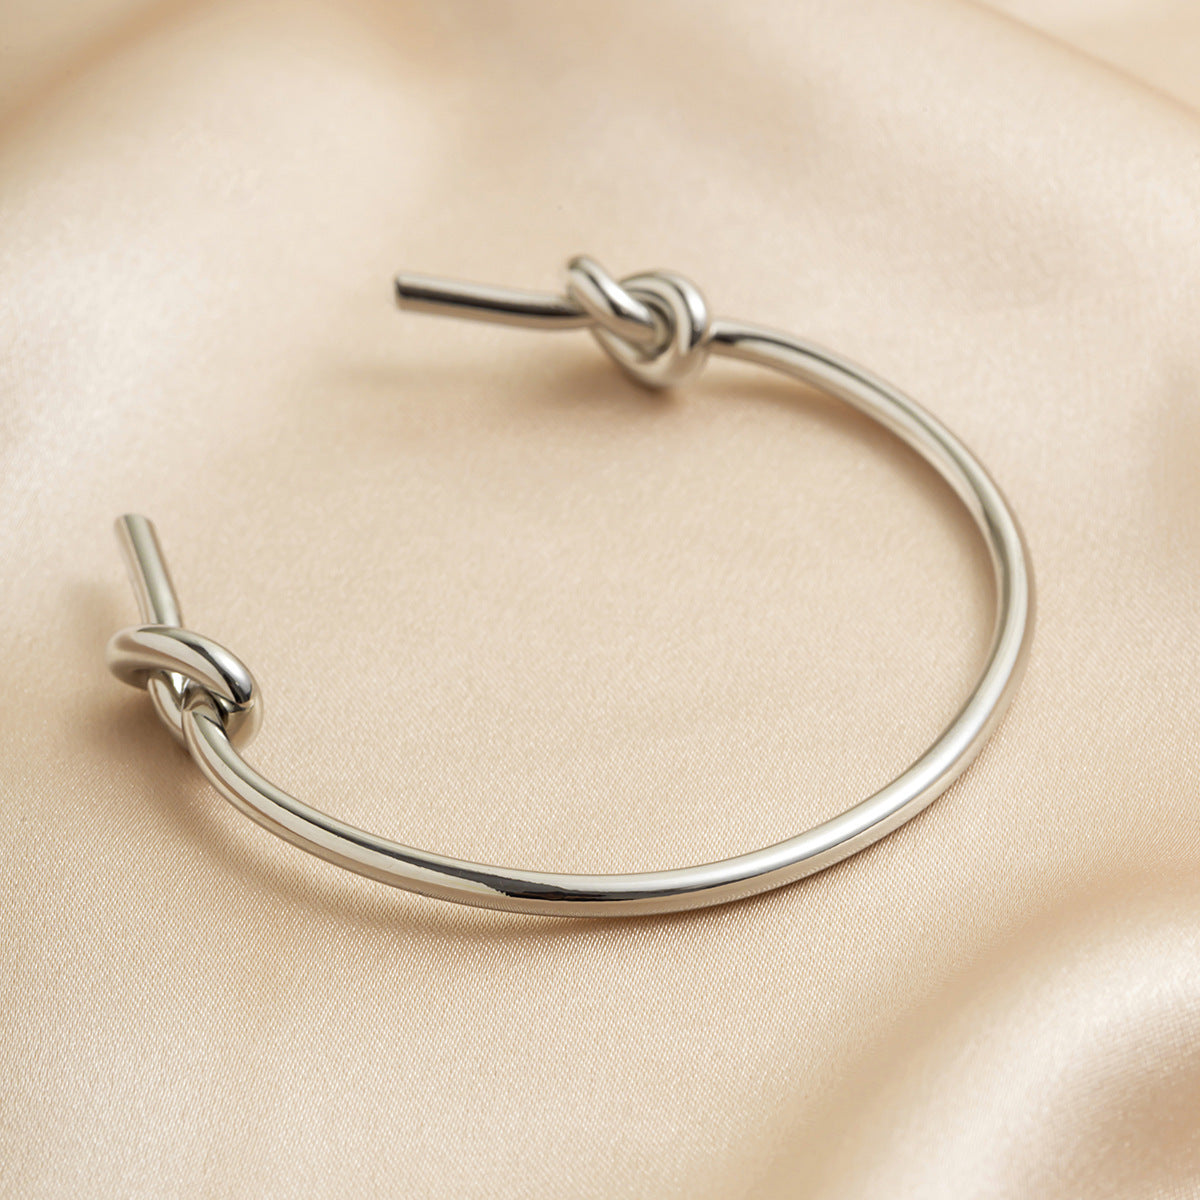 Design Double-layer Hollow Knot Open-ended Bracelet Women